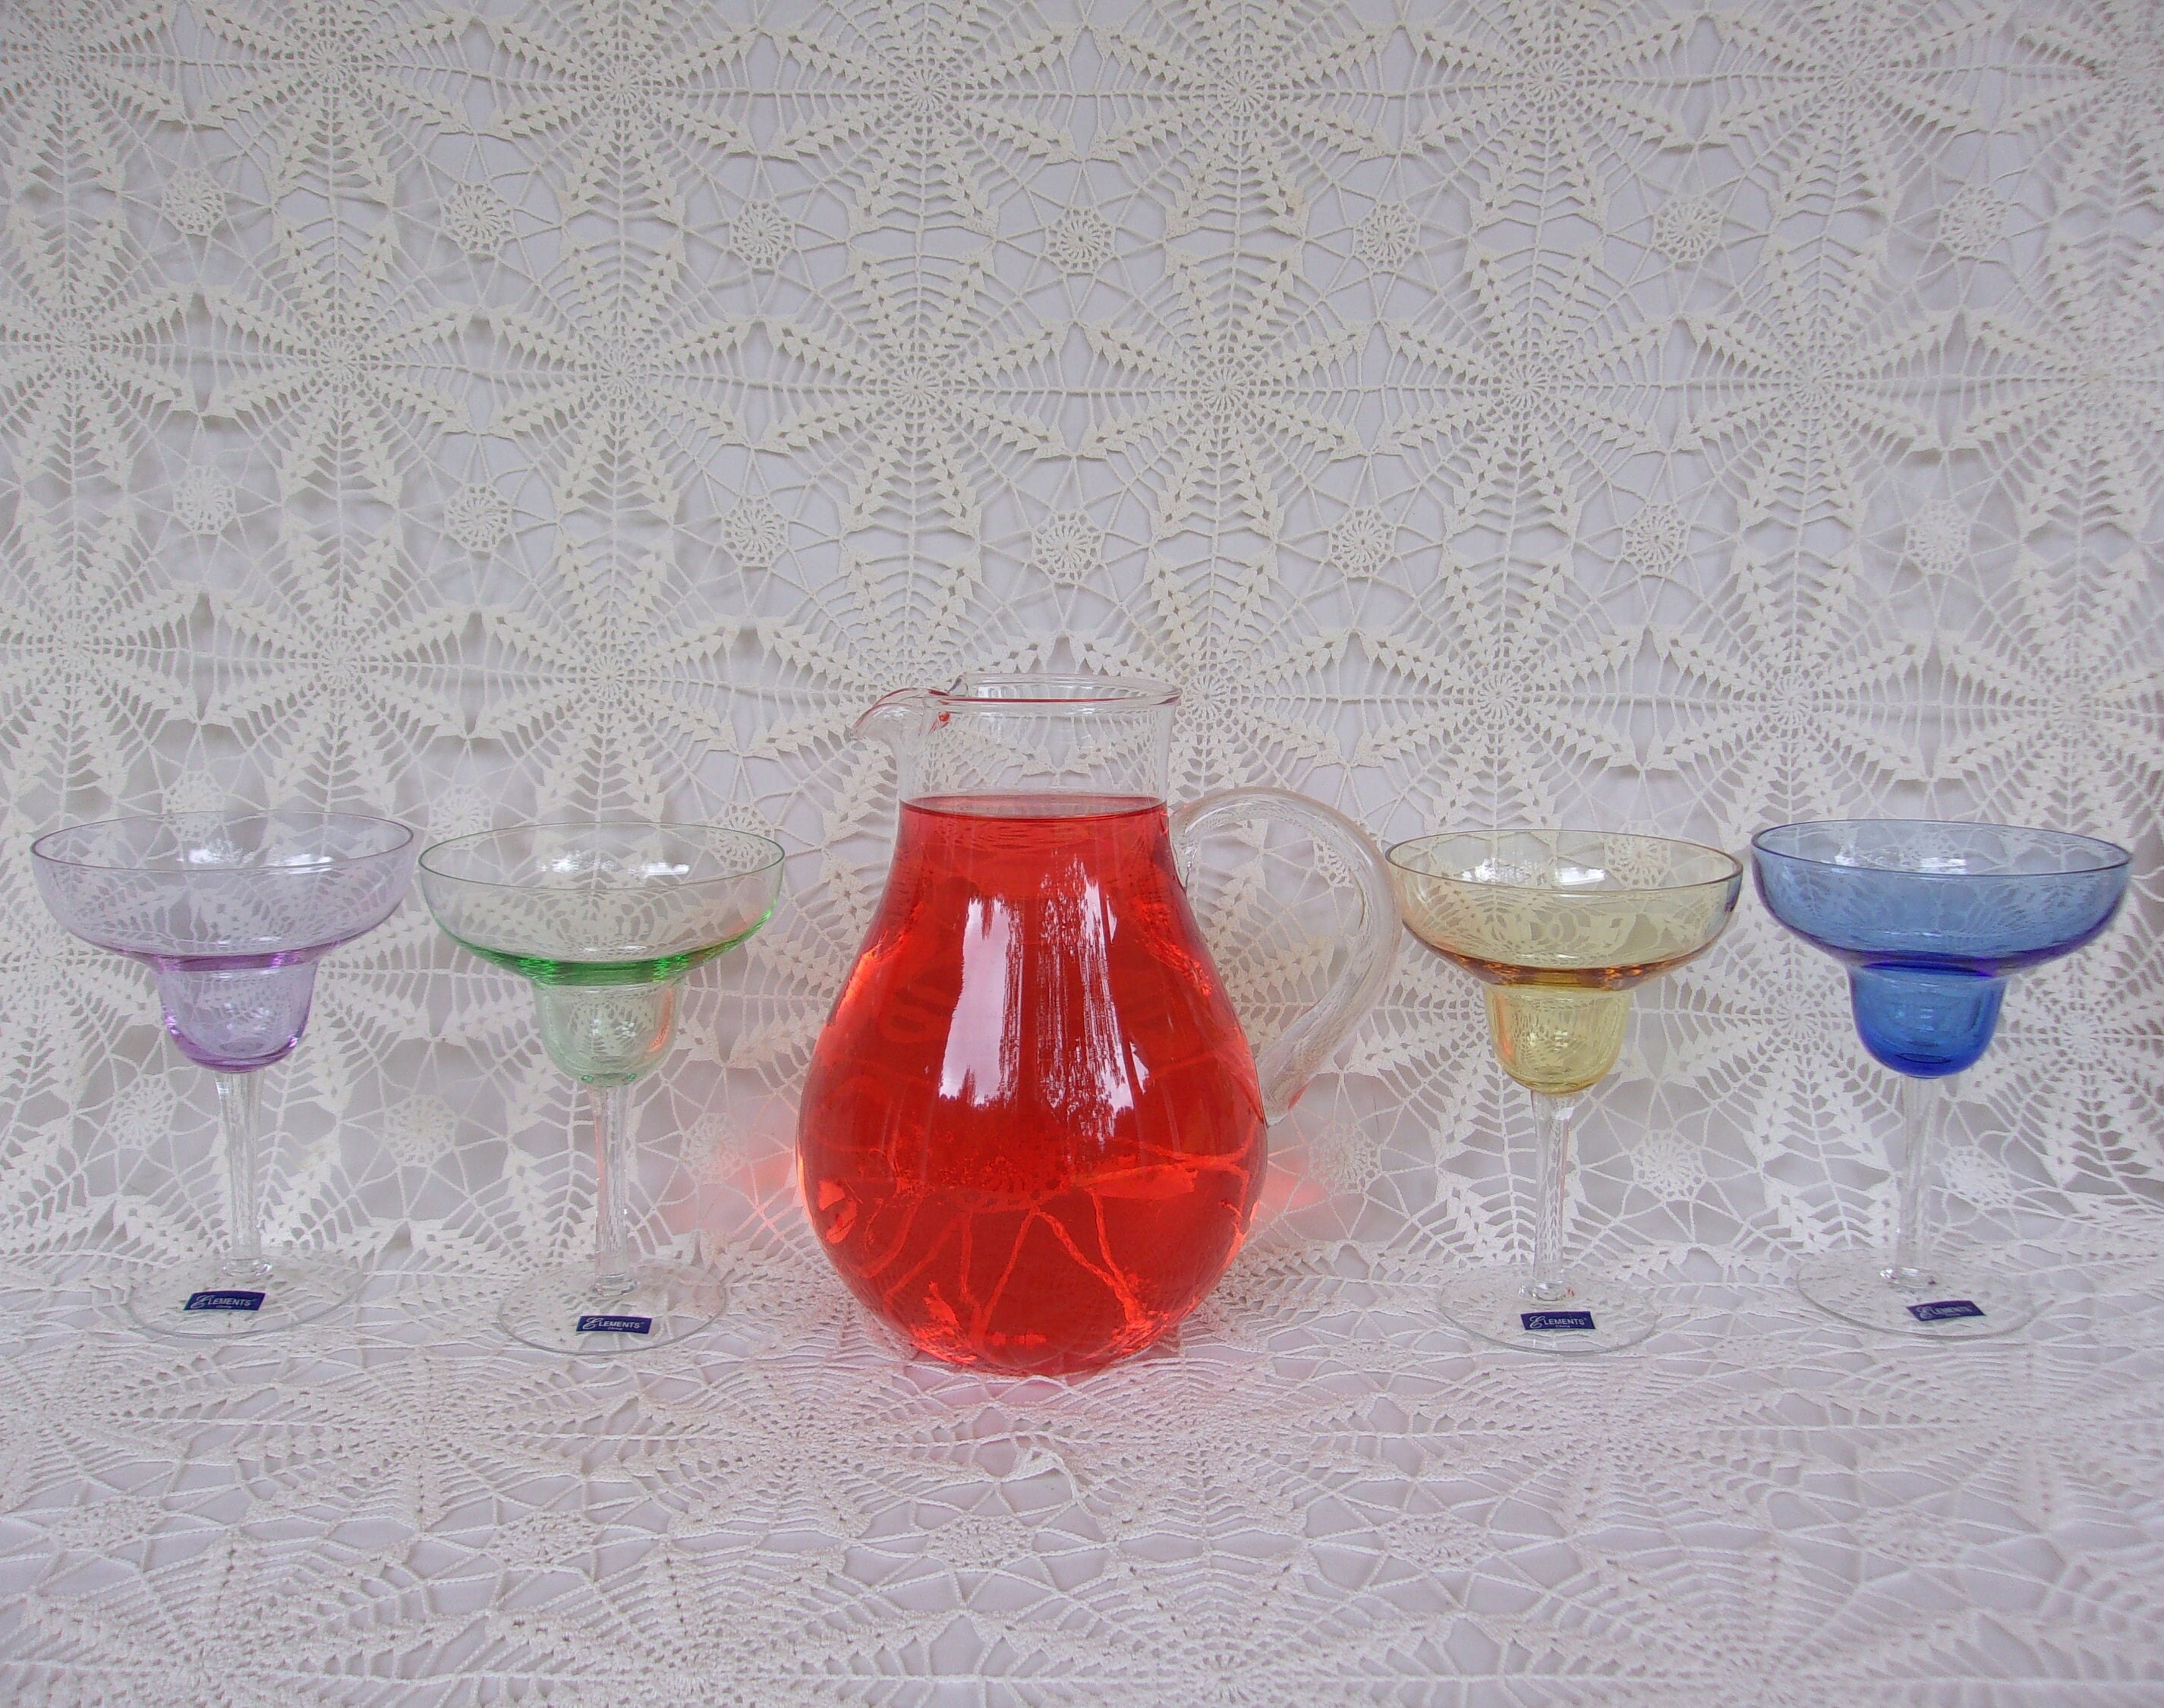 Vintage Set of 2 Margarita Glasses – NUDE International